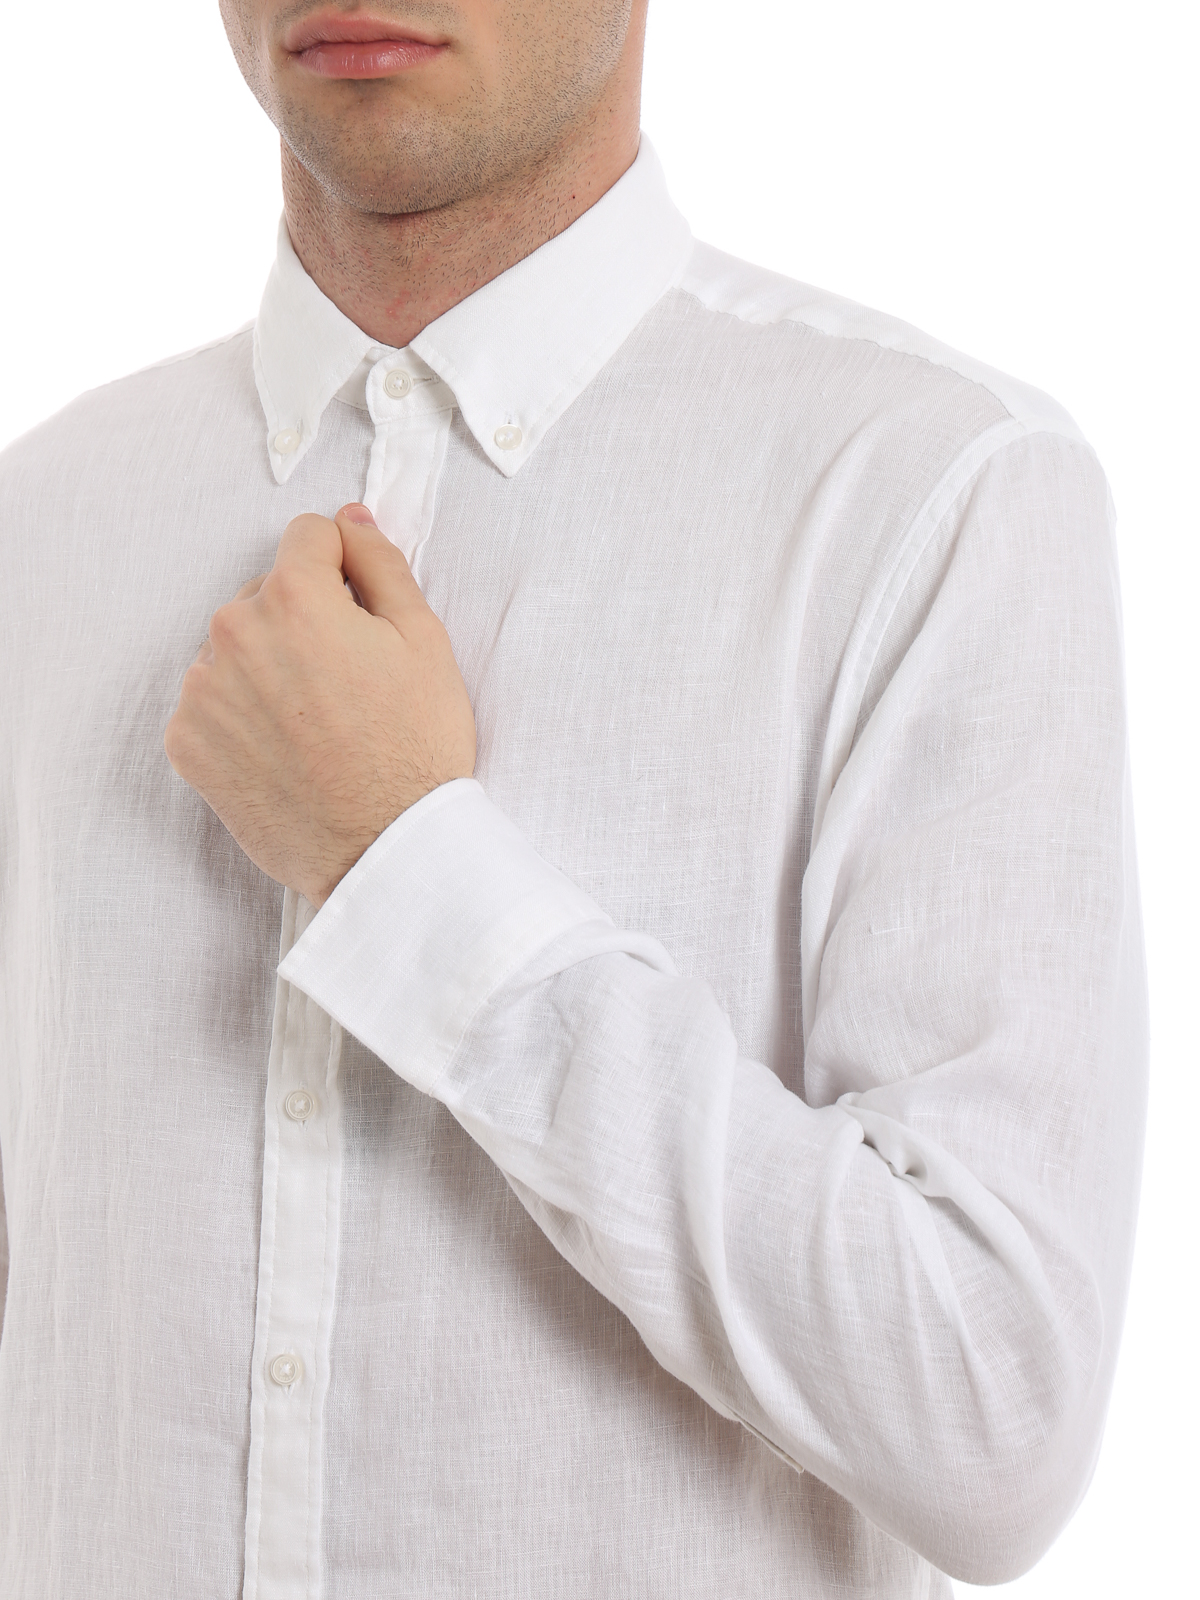 collar white linen shirt - shirts 